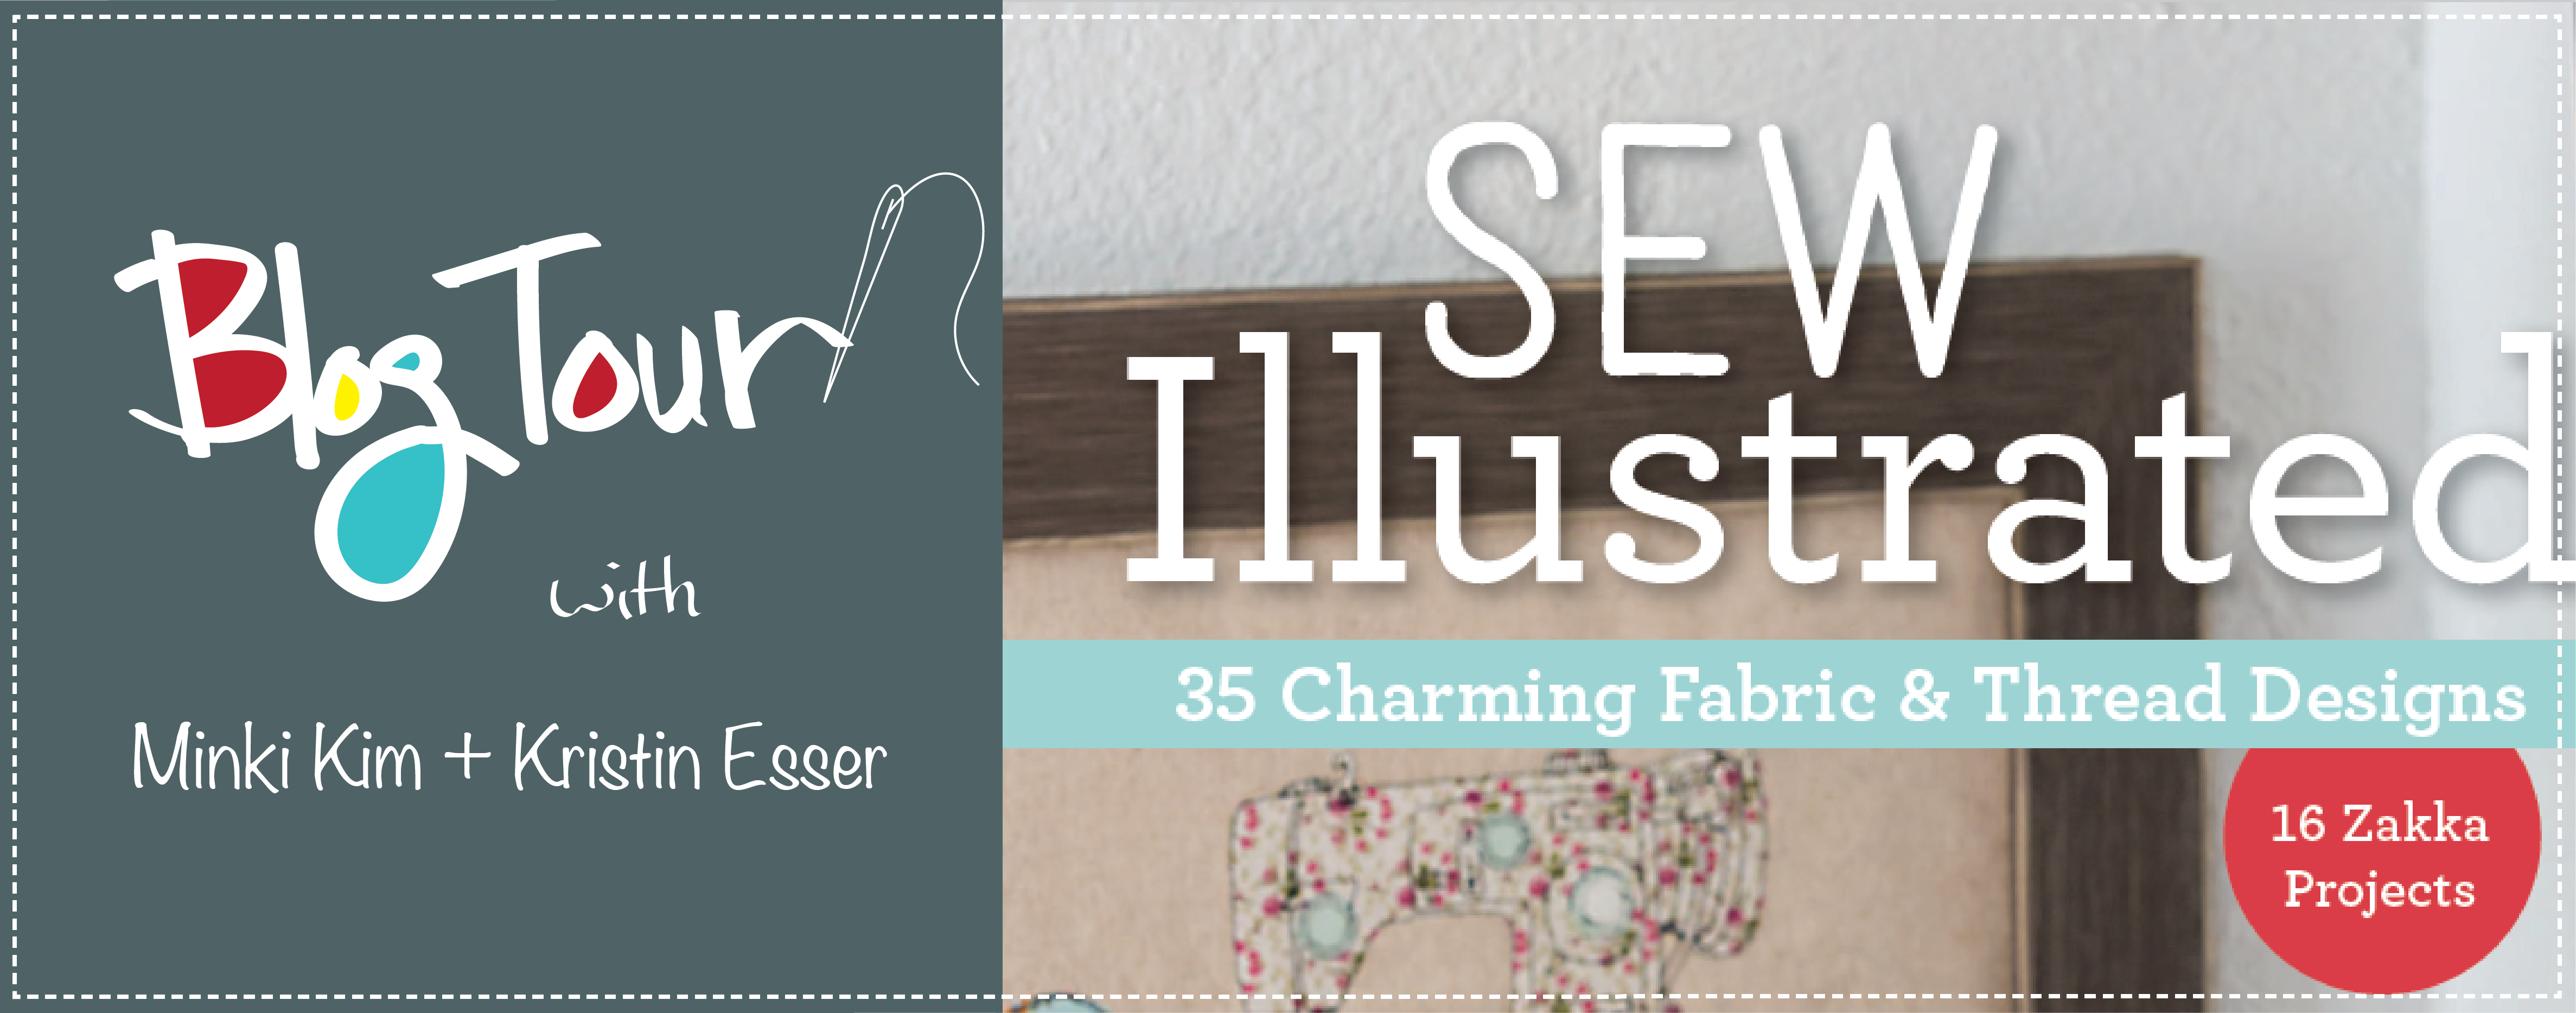 Sew Illustrated blog tour banner